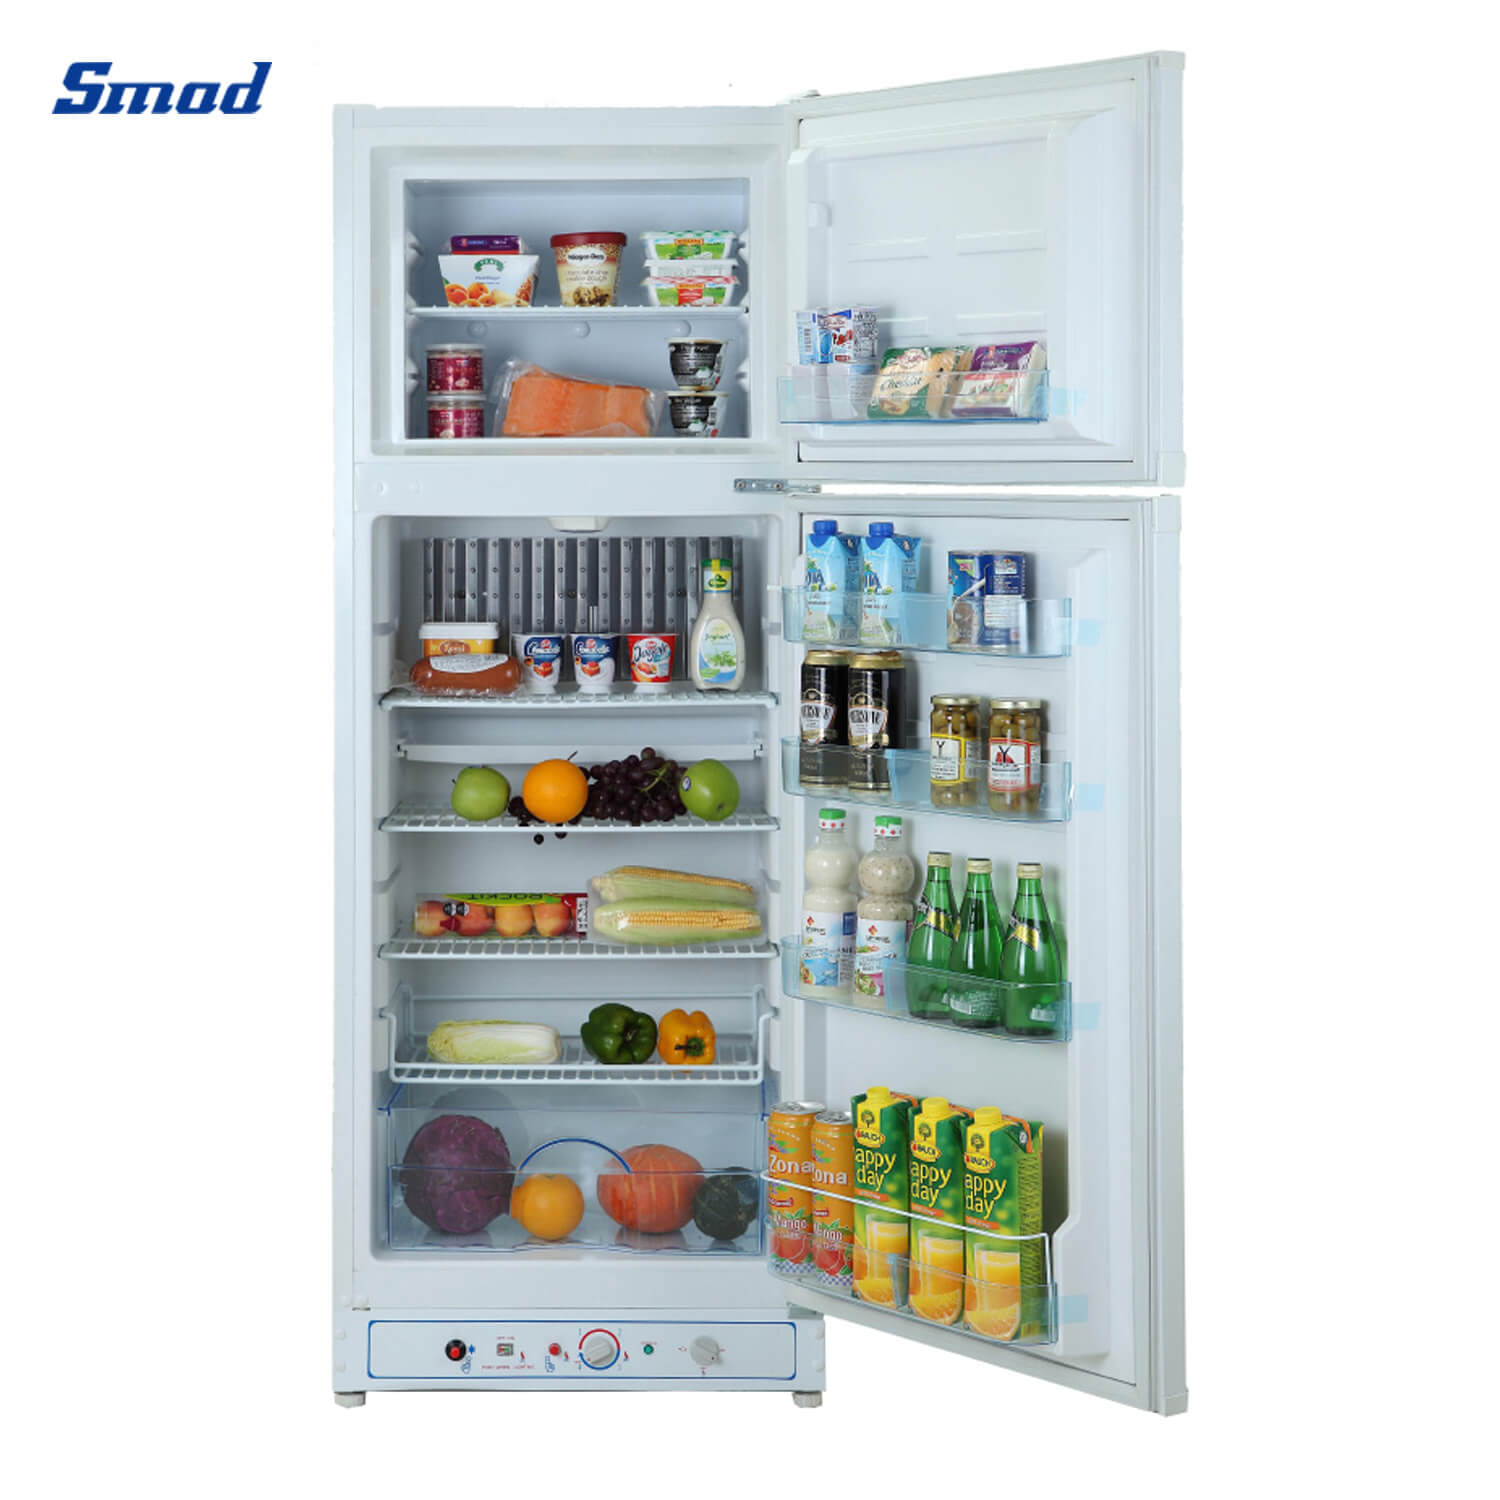 Smad gas refrigerator with big capacity